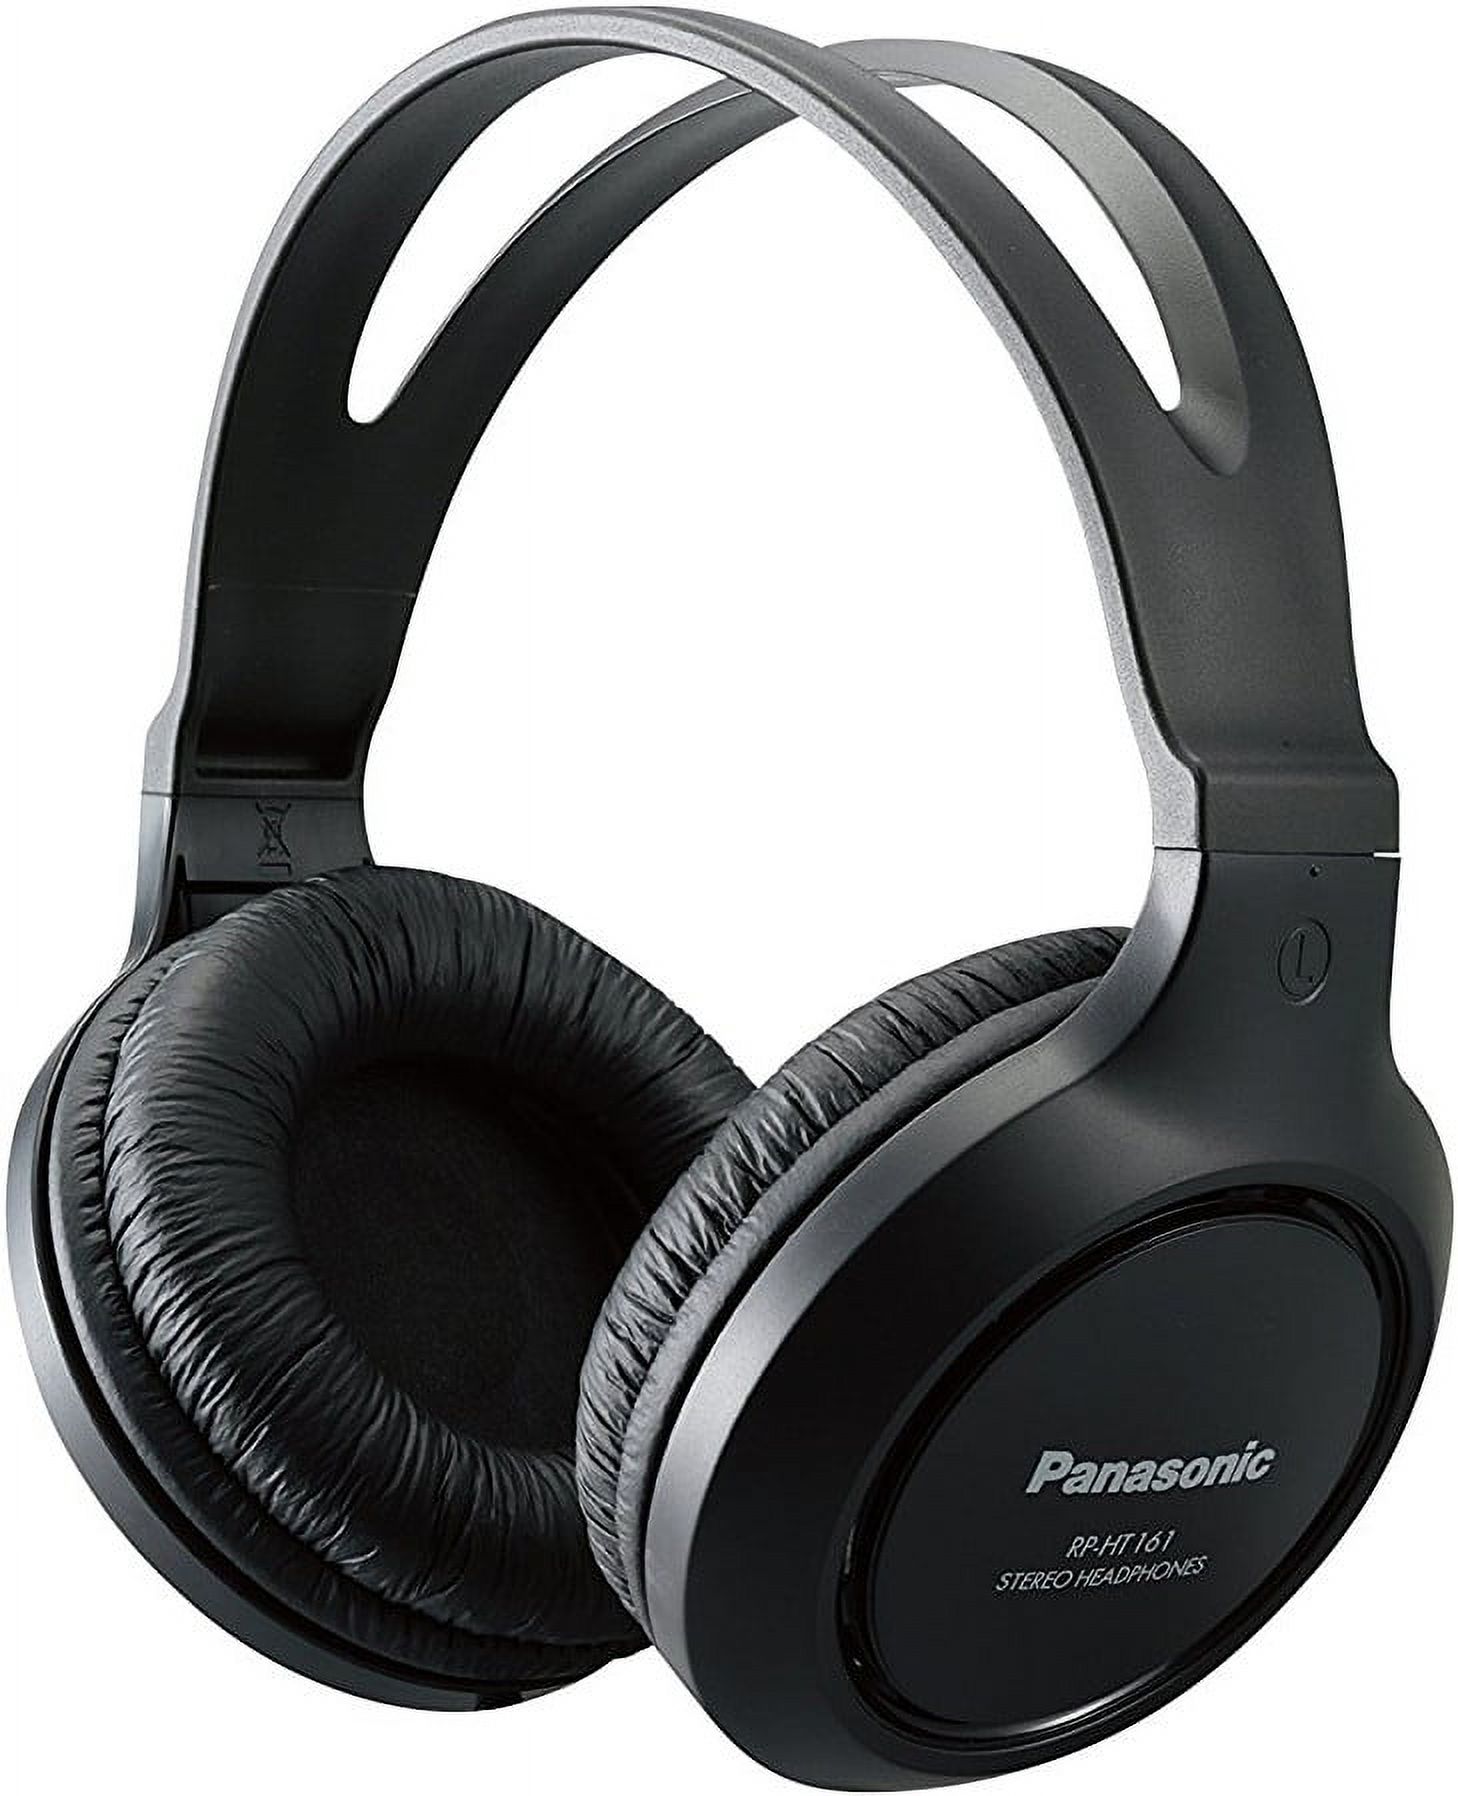 Panasonic Full-Size Over-Ear Wired Long-Cord Headphones, Black, RP-HT161-K - image 2 of 2